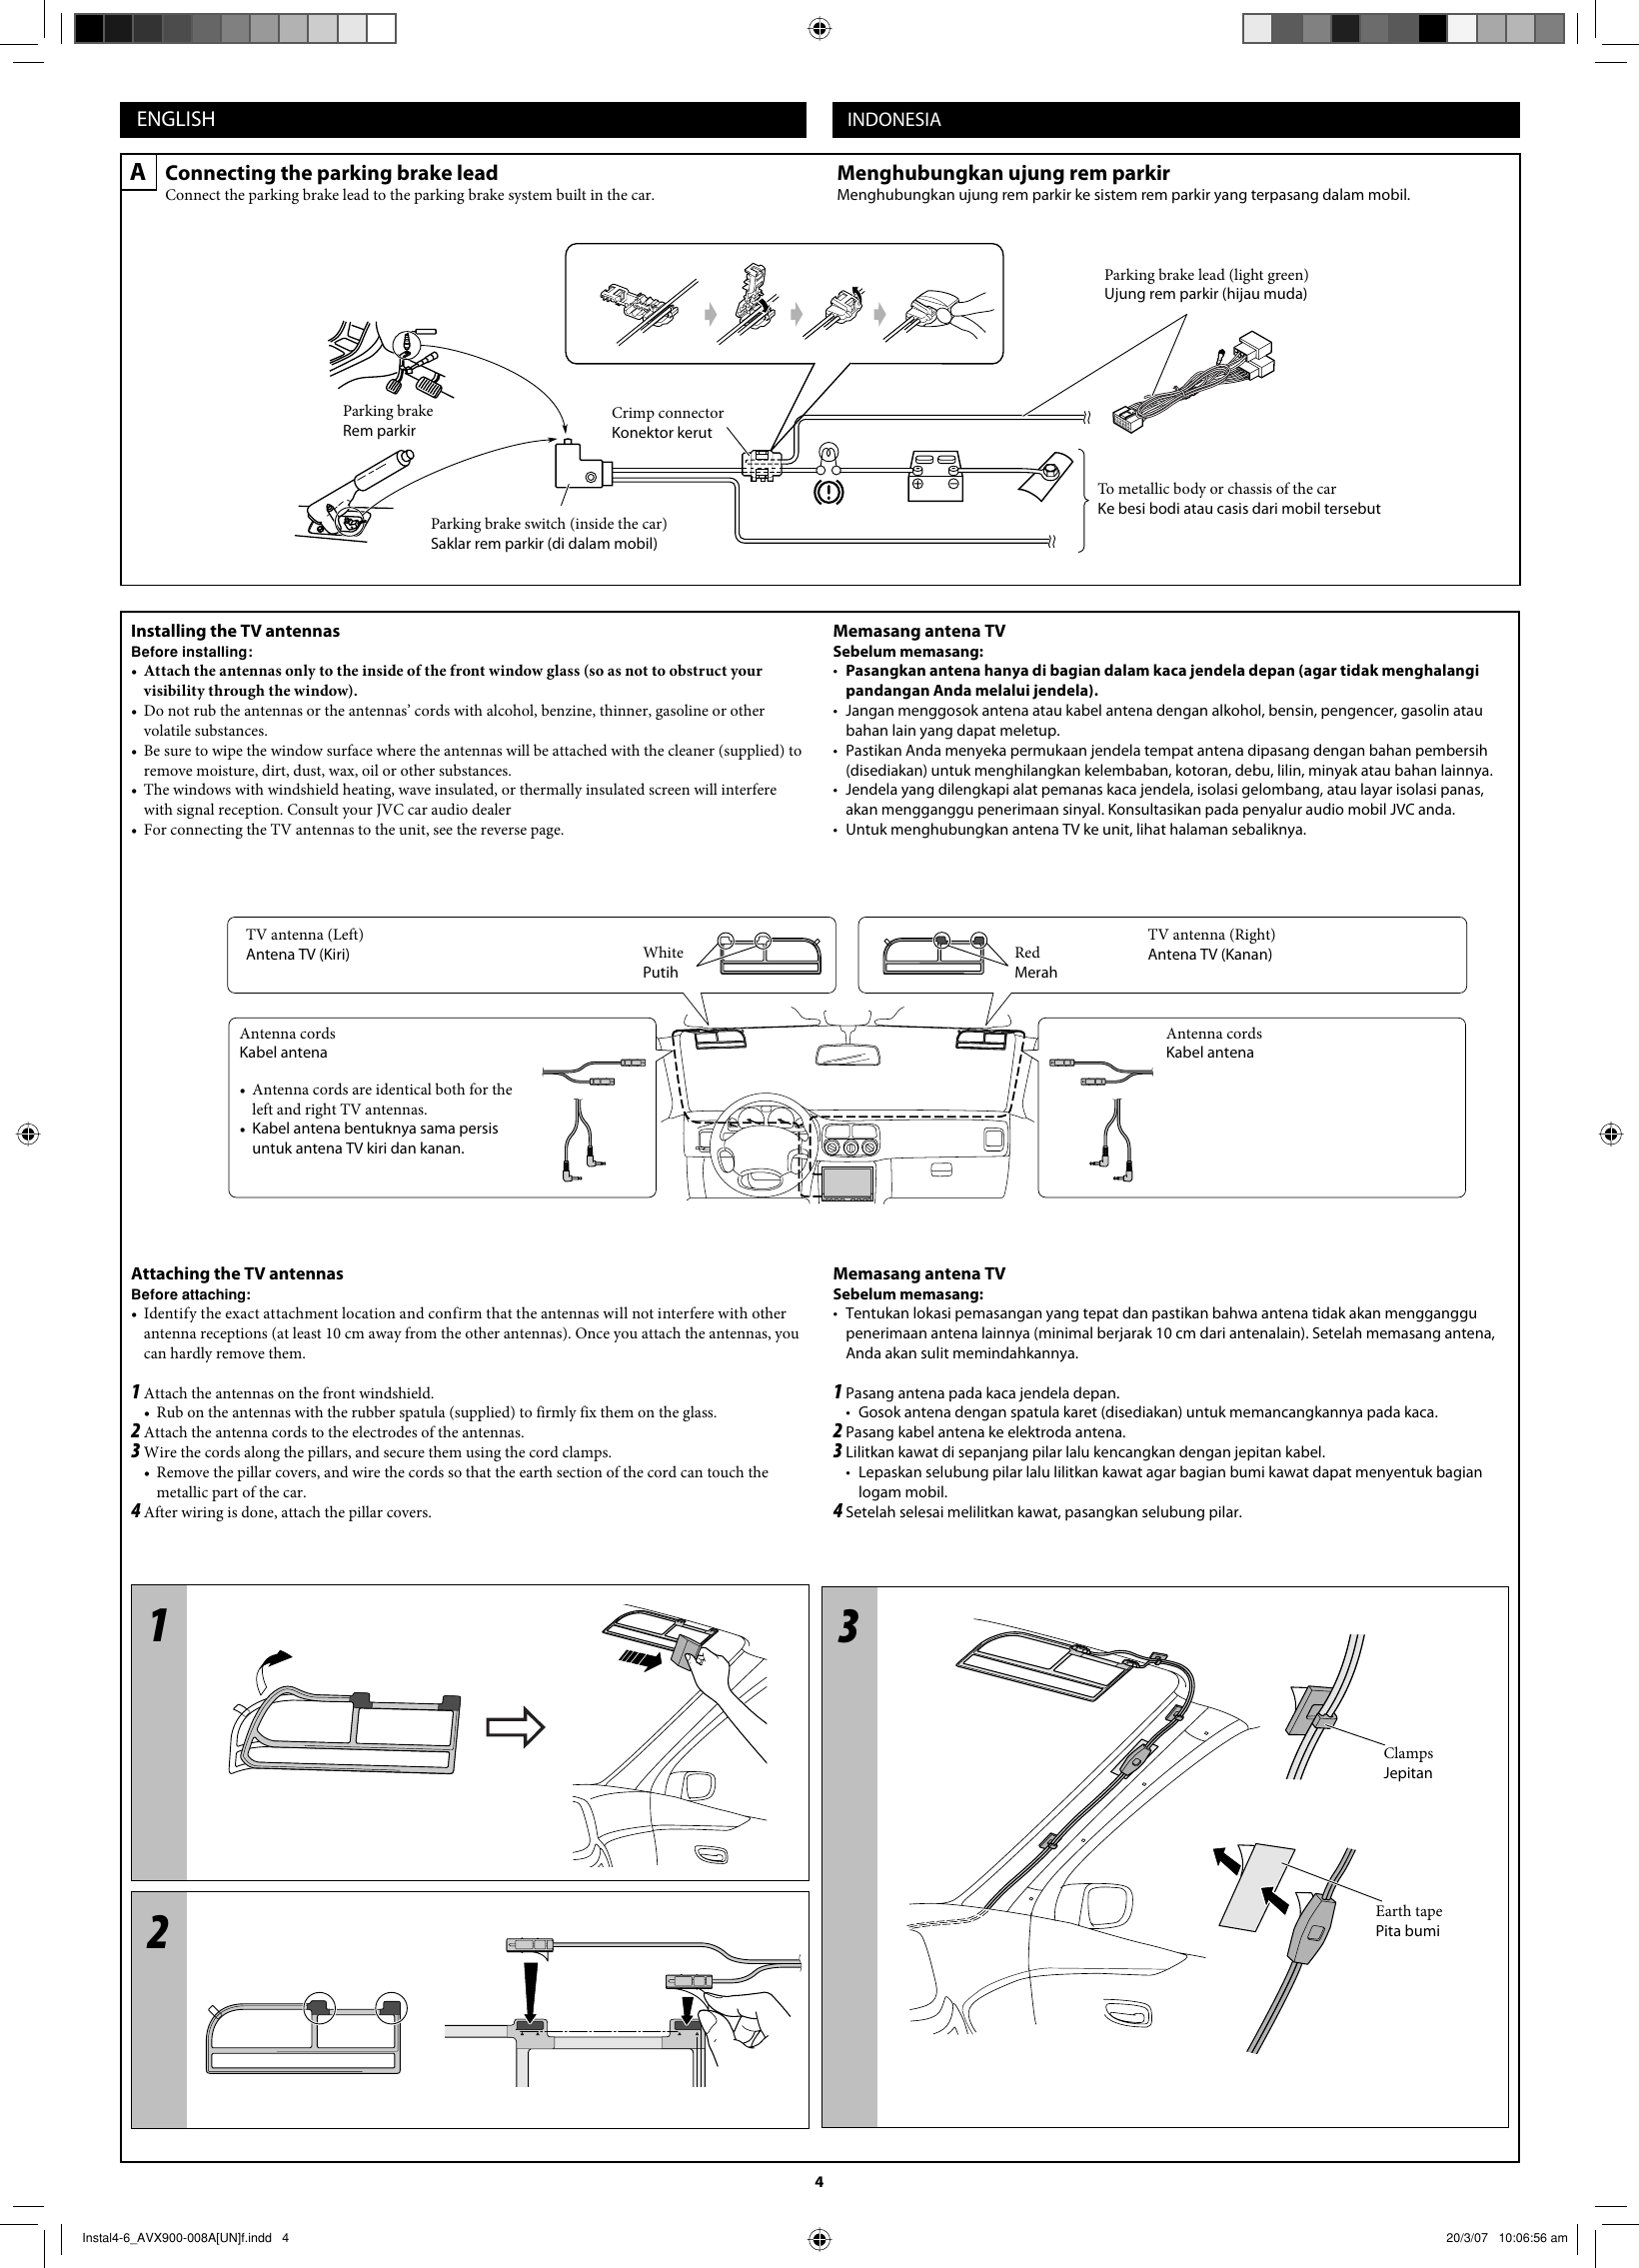 Page 4 of 6 - JVC KW-AVX900UN KW-AVX900[UN] Installation User Manual LVT1670-008A